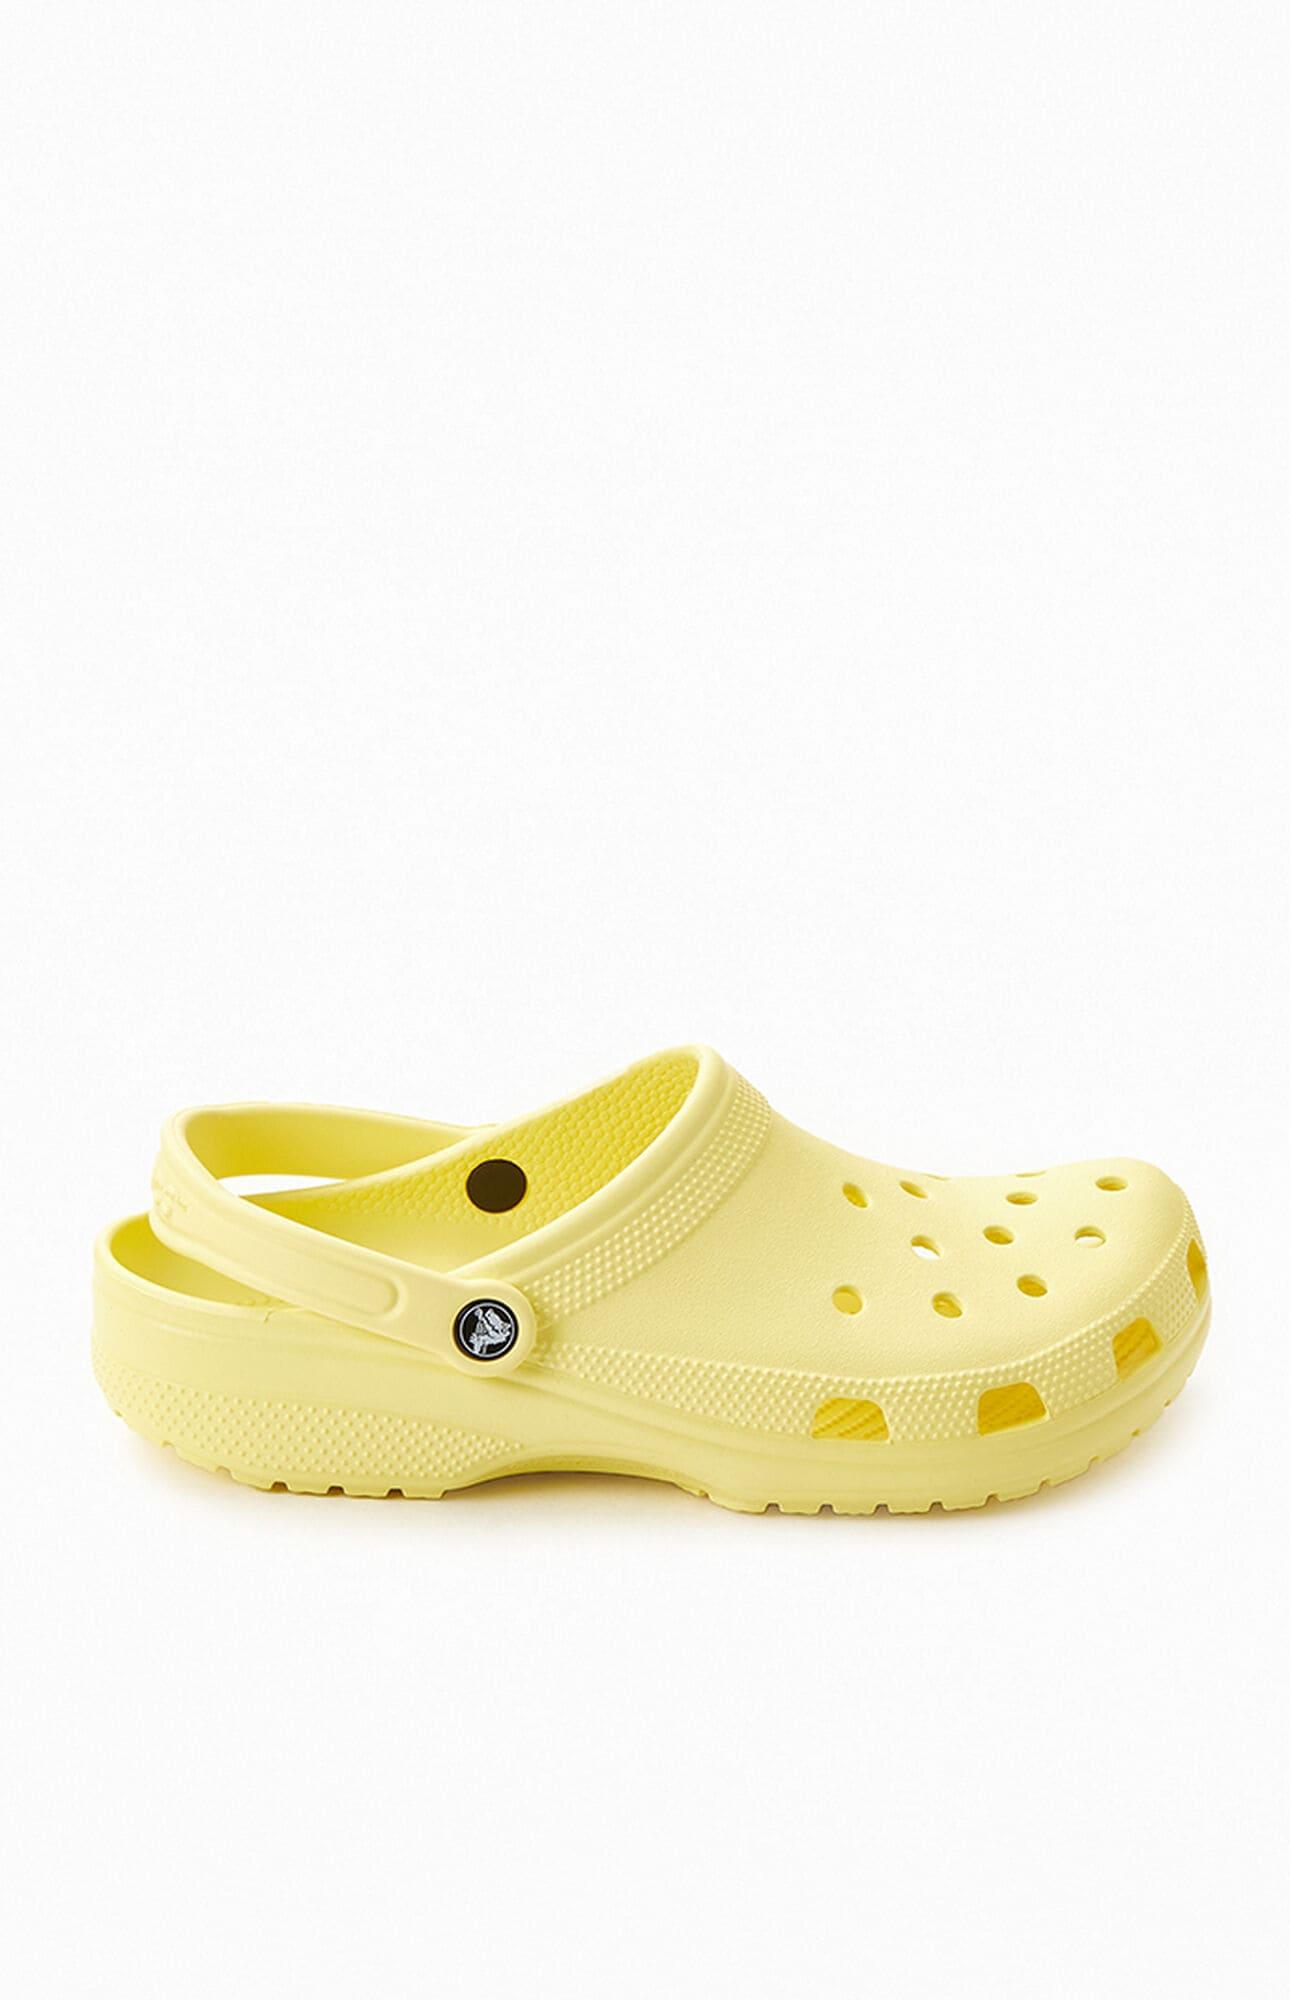 Crocs™ Lemon Baya Clog in Yellow/Yellow (Yellow) for Men - Save 50% - Lyst